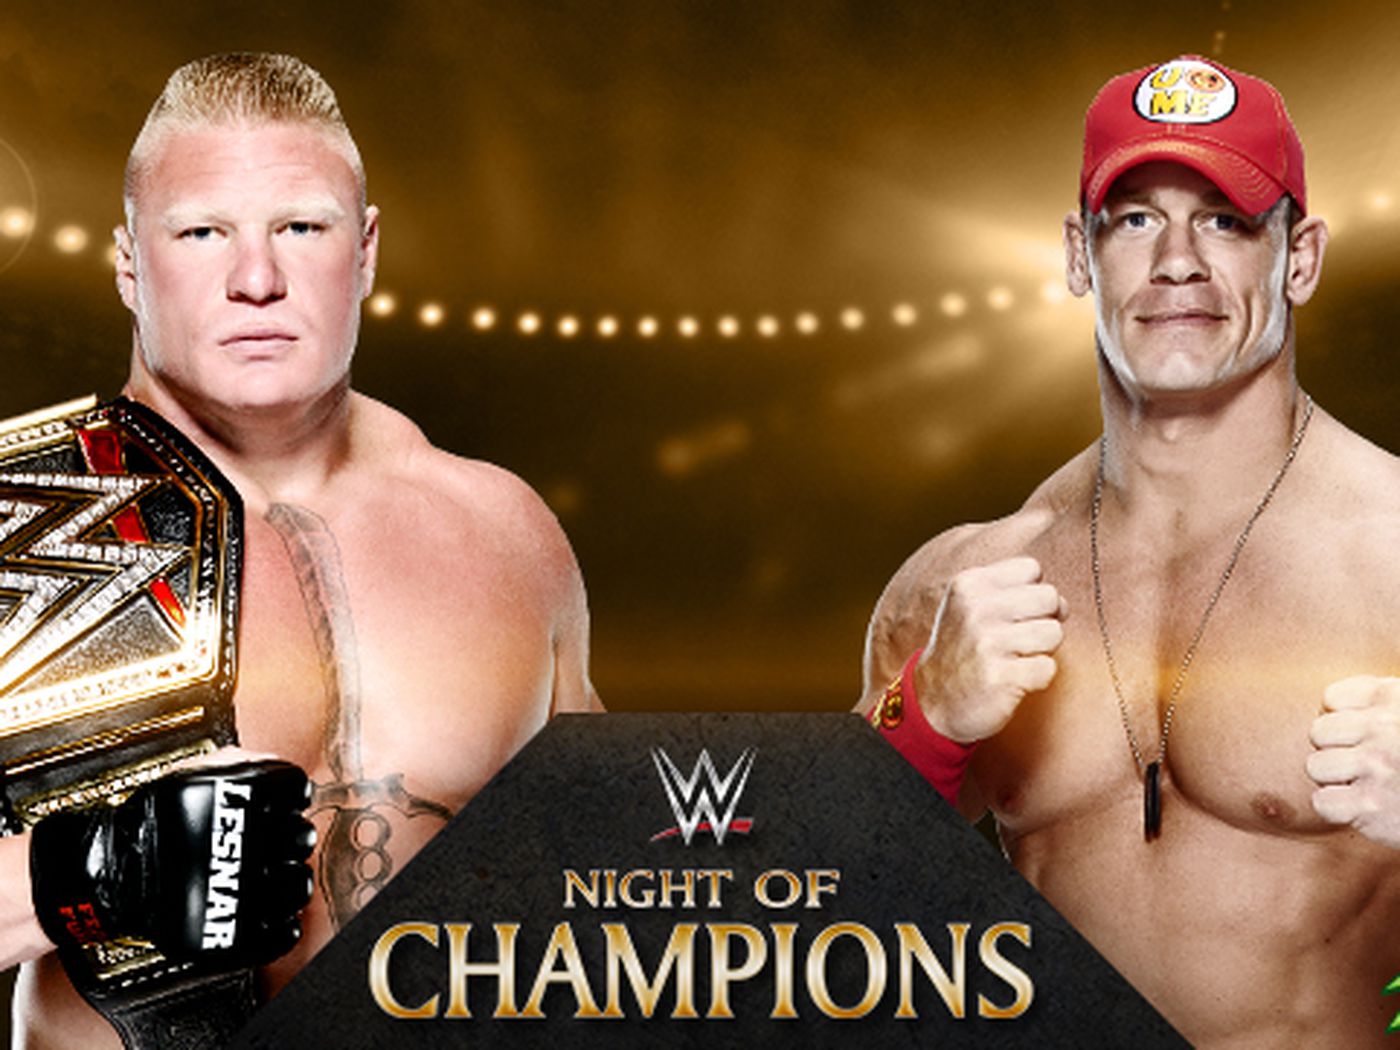 Brock Lesnar vs. John Cena rematch set for WWE Night of Champions 2014